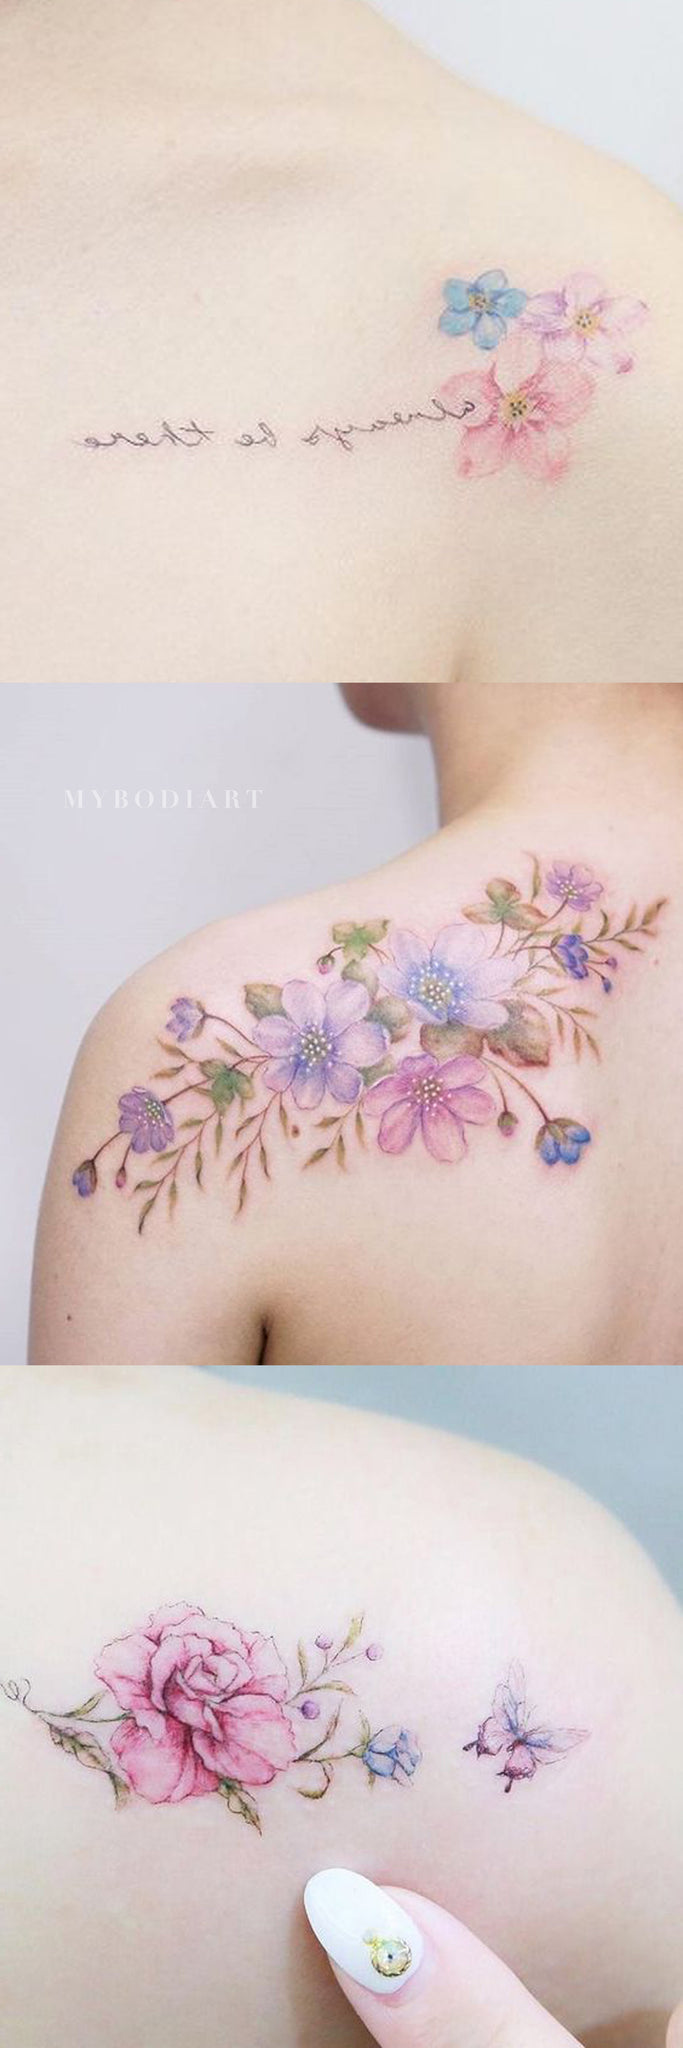 Popular Watercolor Flower Tattoo Ideas for Women Pink Blue Purple Floral Rose Shoulder Back Tattoos -  Ideas populares del tatuaje de la flor de la acuarela para las mujeres - www.MyBodiArt.com